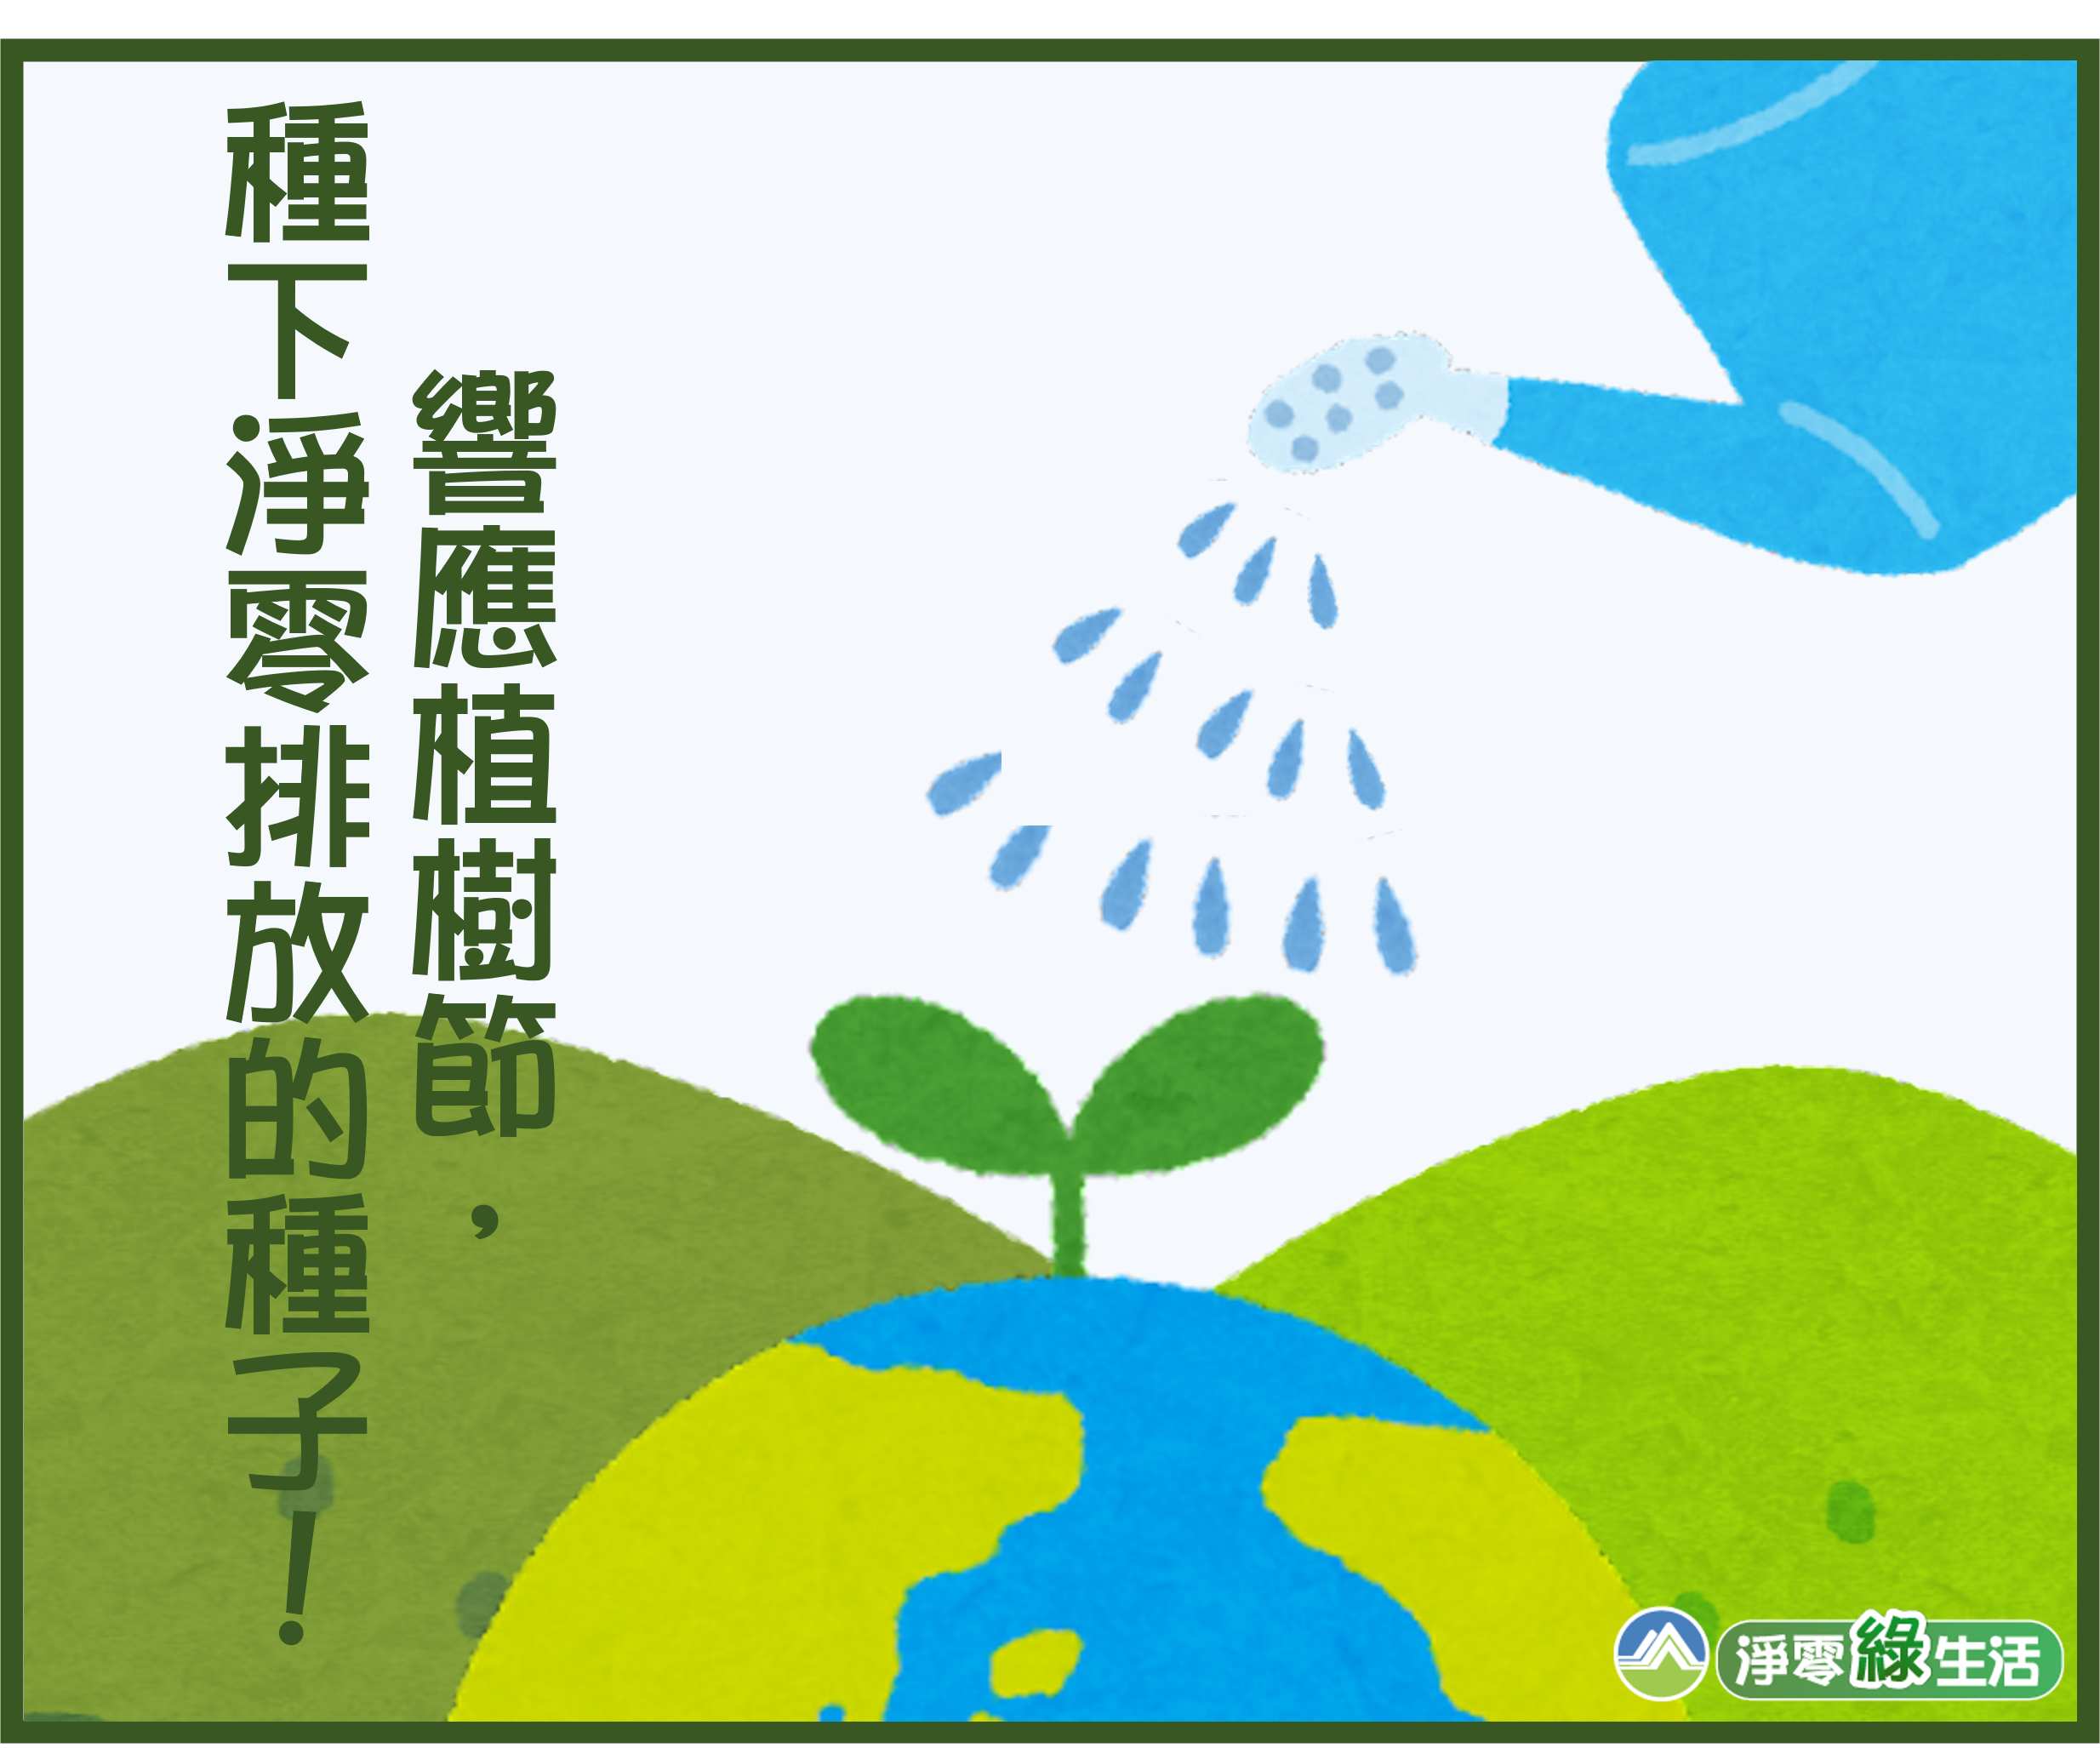 Featured image for “響應植樹節，種下淨零排放的種子！”